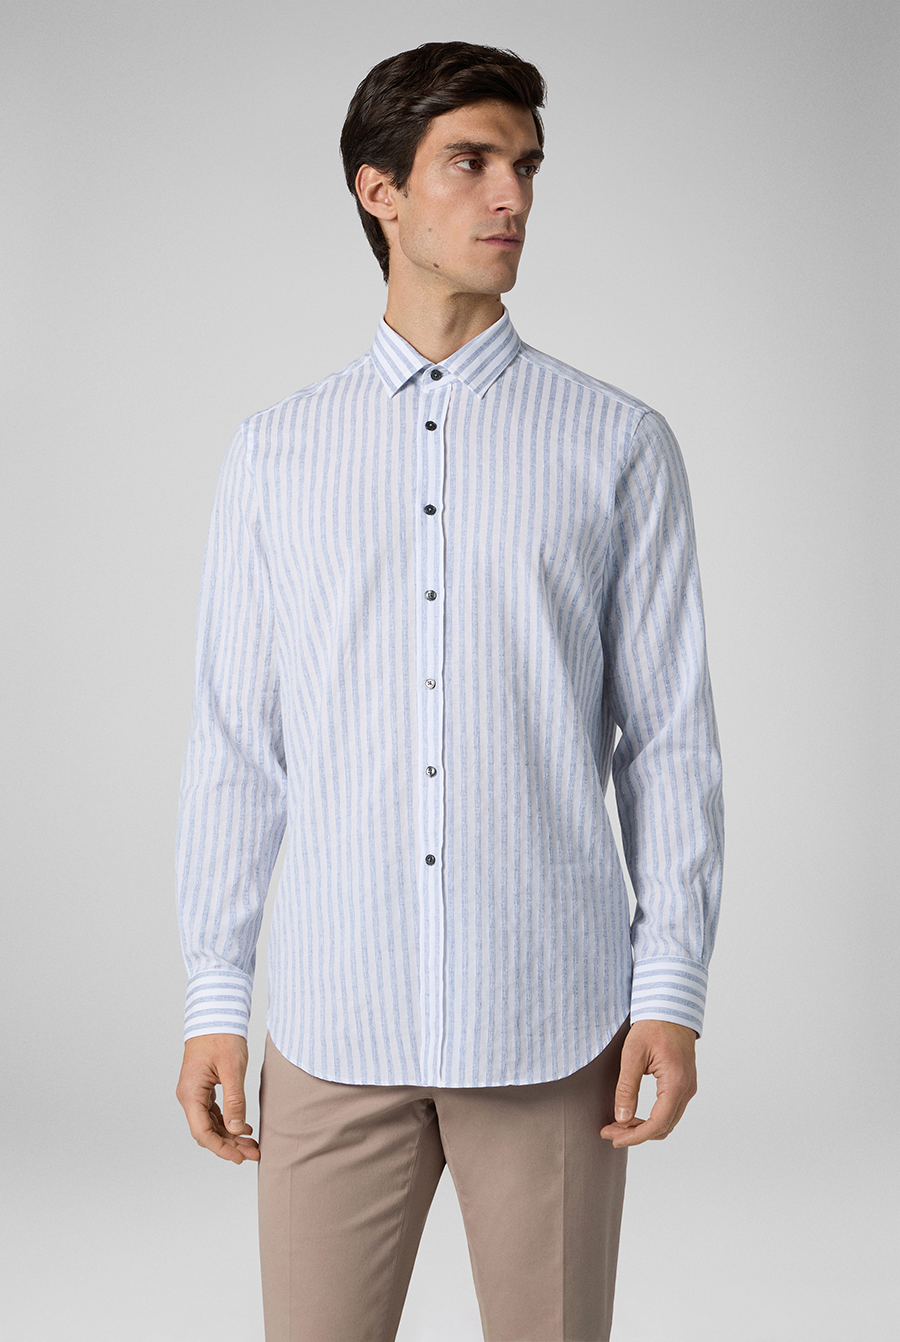 White and lightblue pinstripe shirt LIGHT BLUE Pal Zileri | Shop